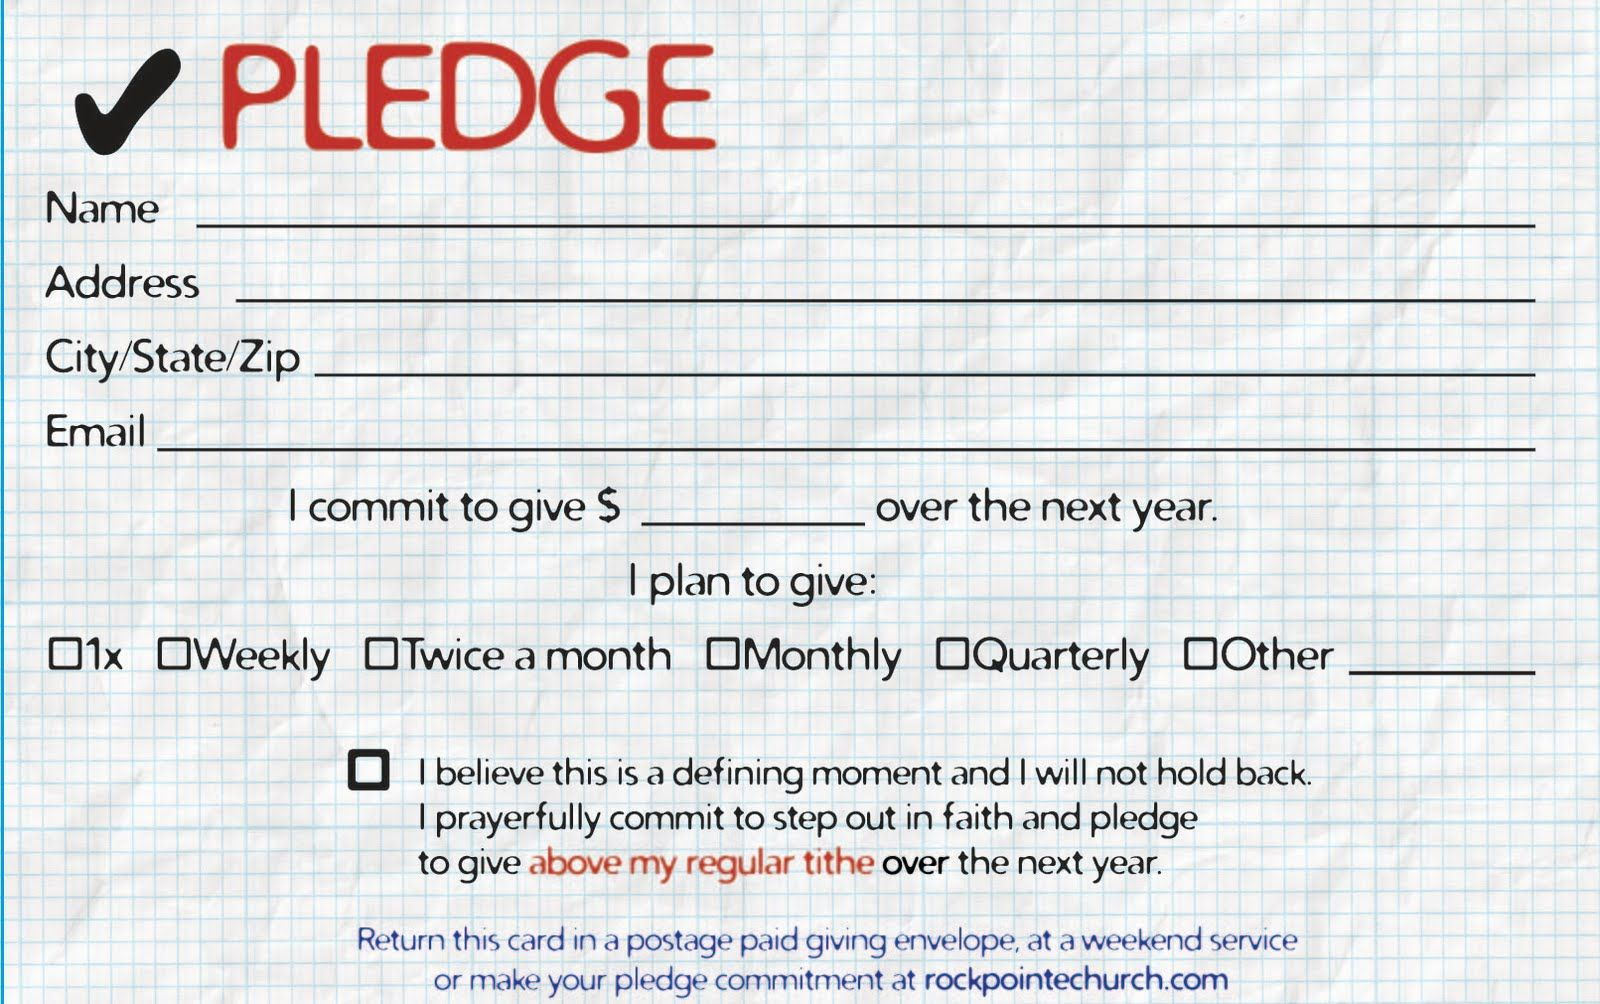 Pledge Cards For Churches | Pledge Card Templates | Card Pertaining To Free Pledge Card Template